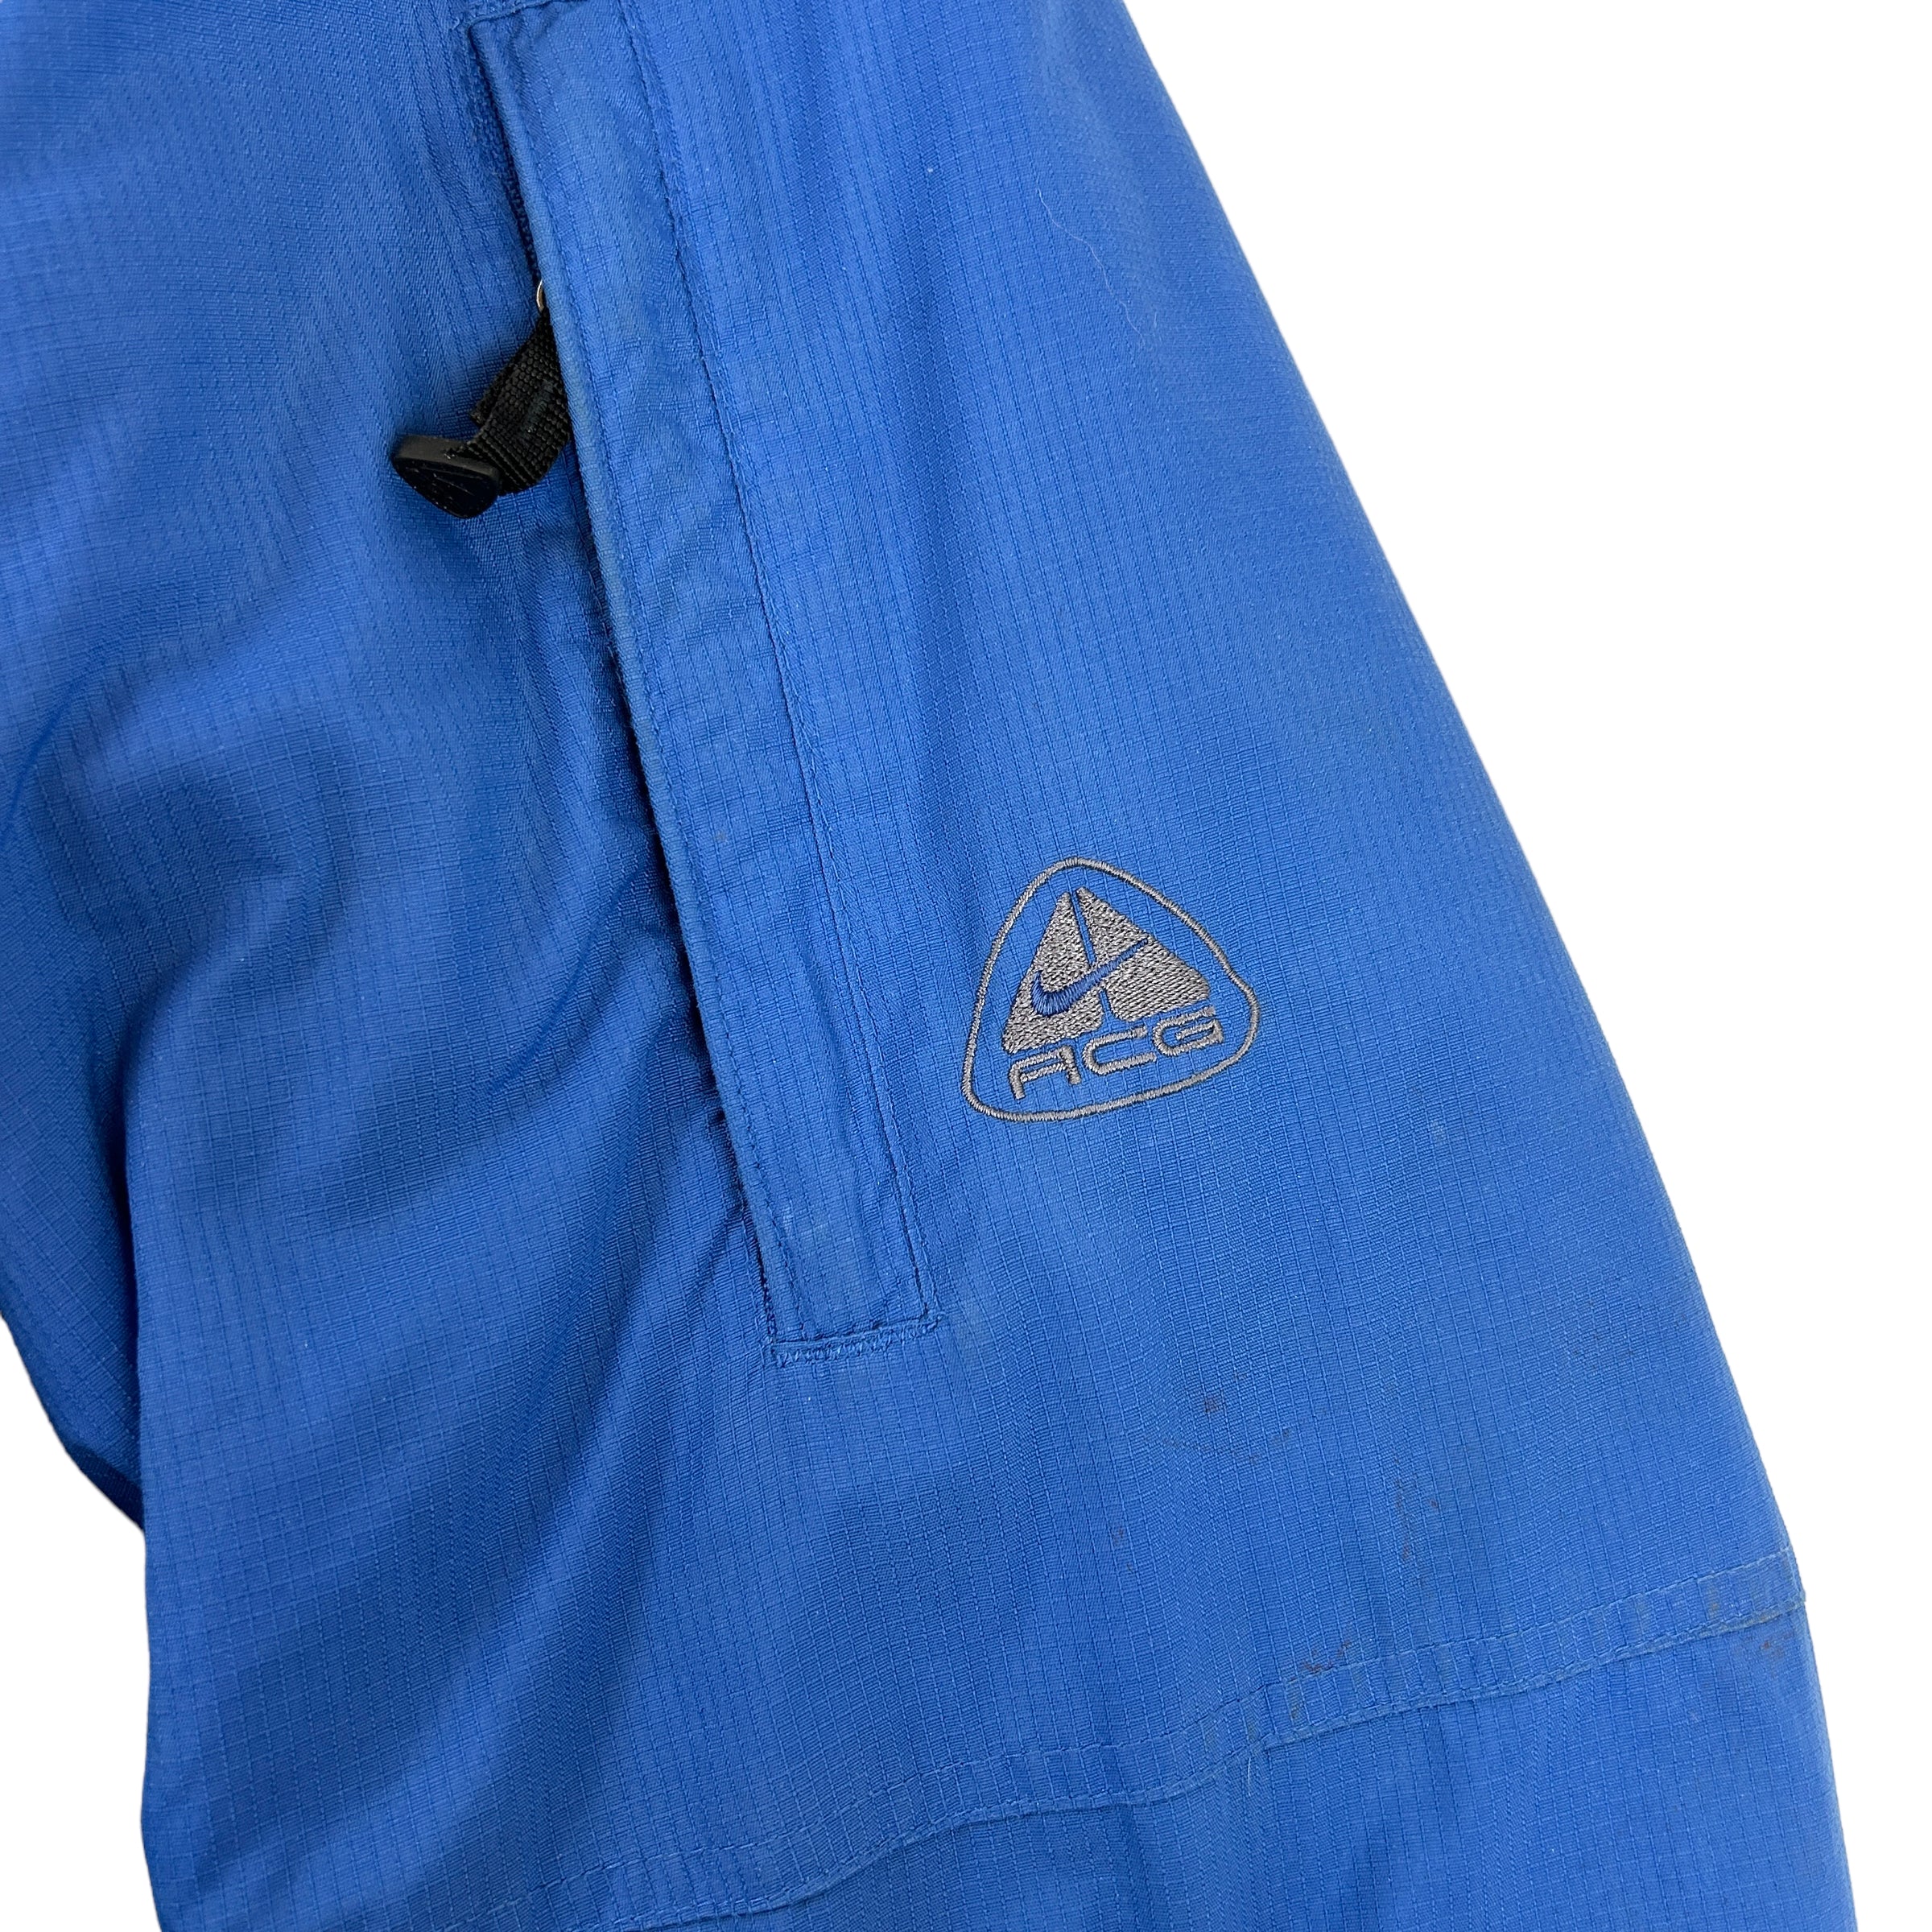 Vintage Nike ACG Sherpa Lined Jacket